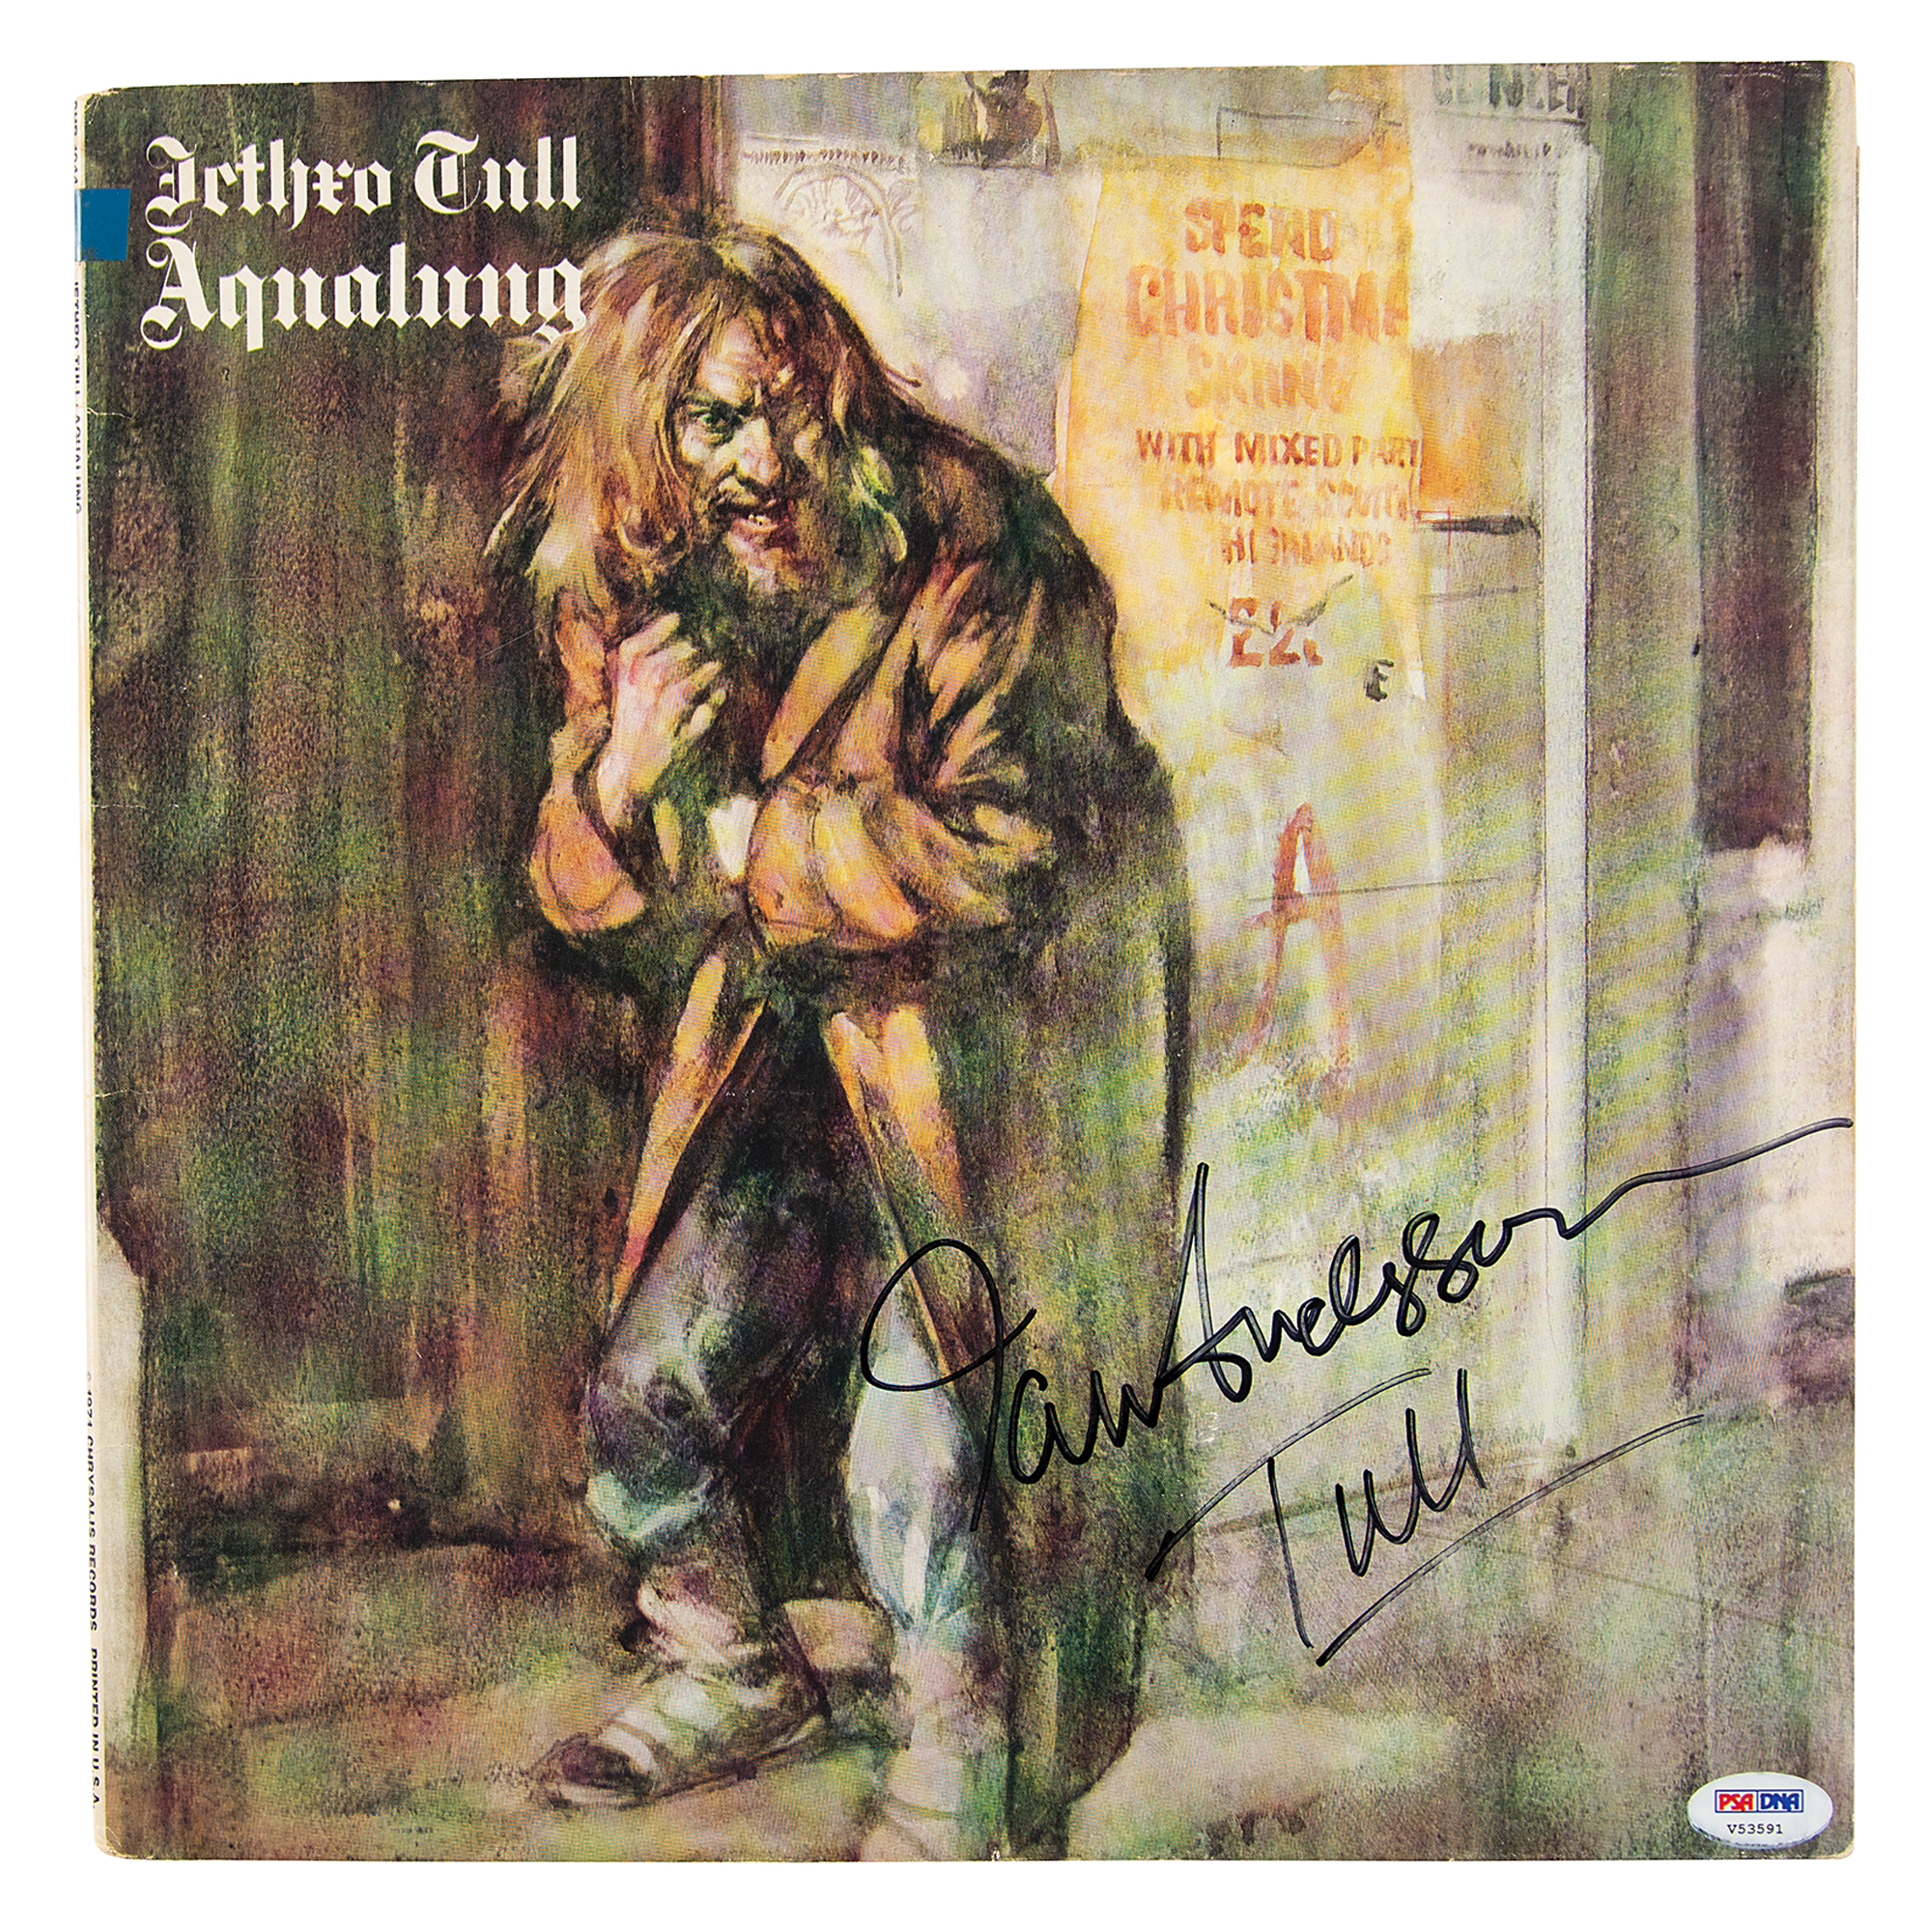 Lot #634 Jethro Tull: Ian Anderson Signed Album